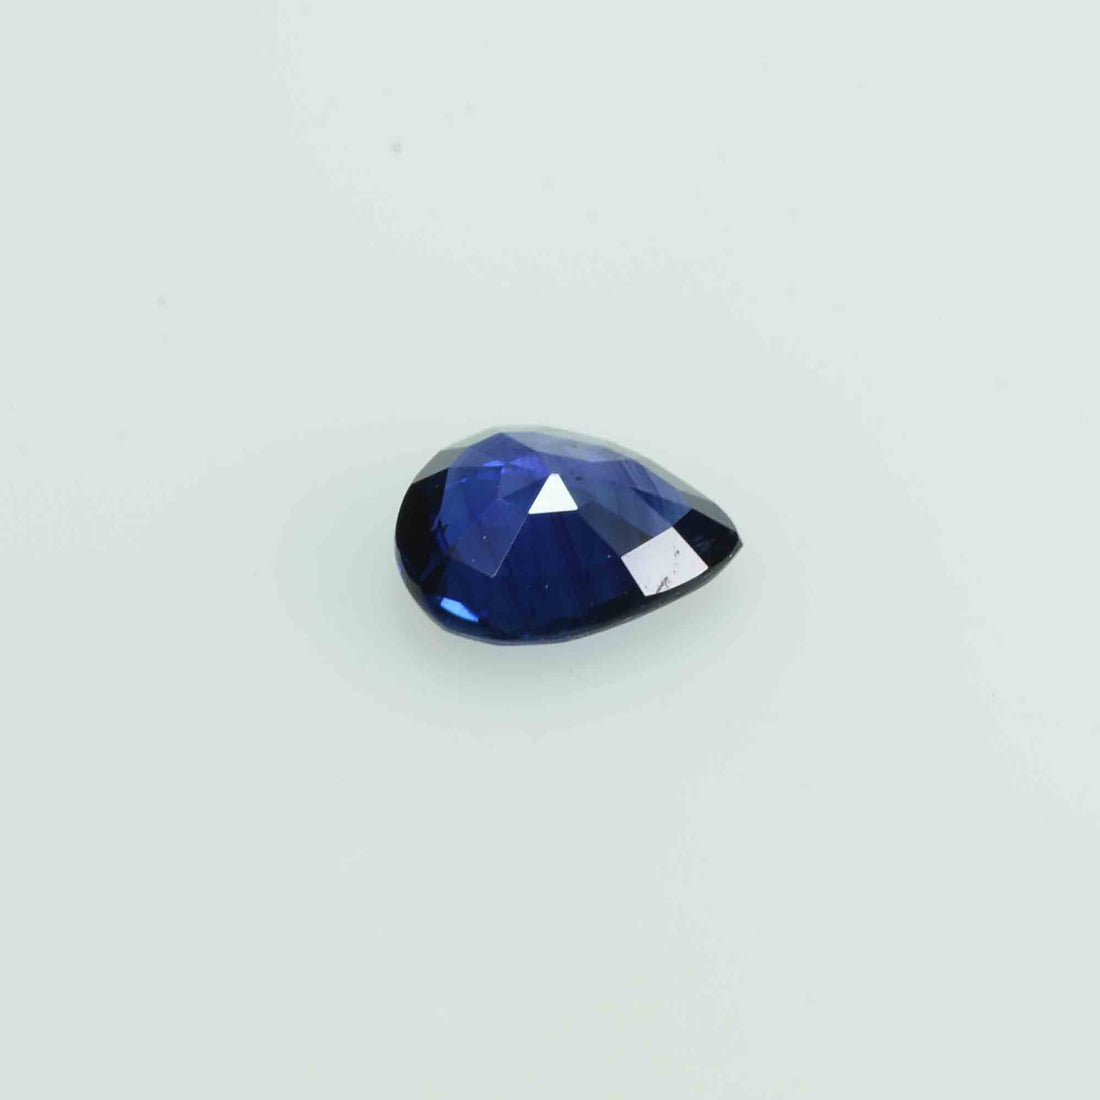 0.45 cts Natural Blue Sapphire Loose Gemstone Pear Cut